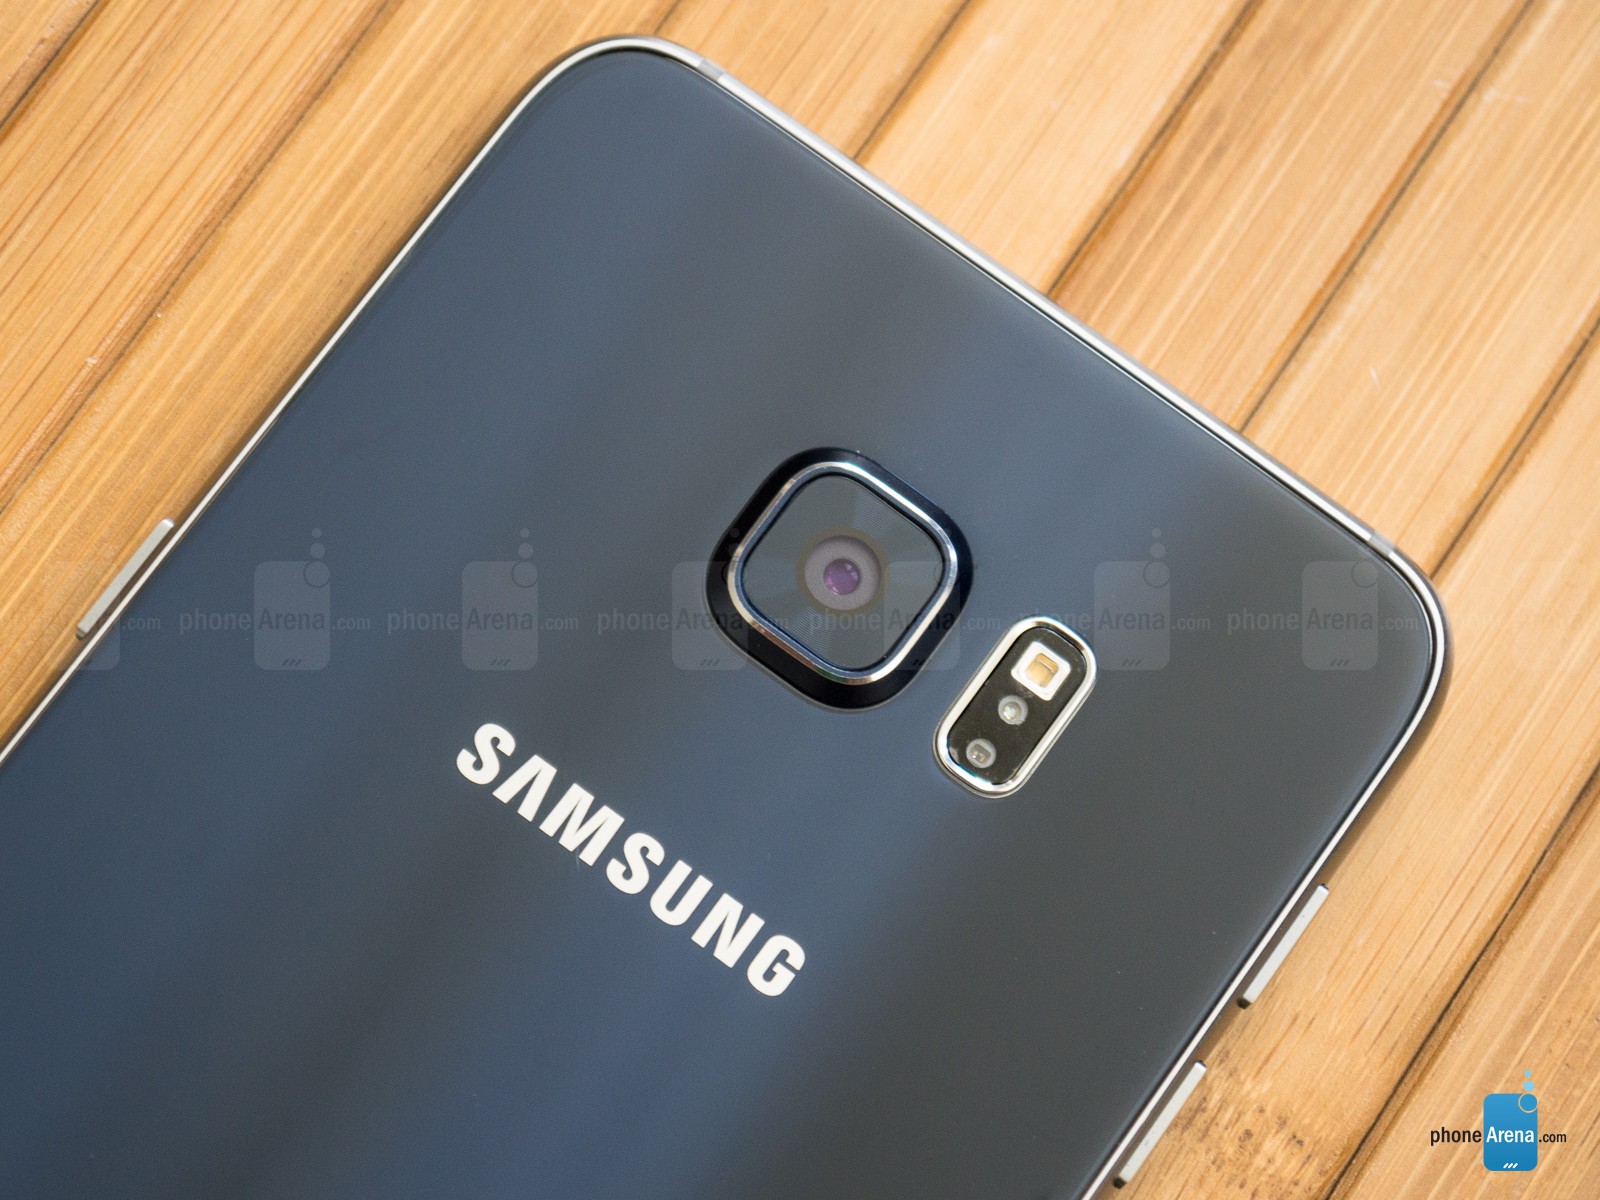 Samsung Galaxy S6 Edge + camera